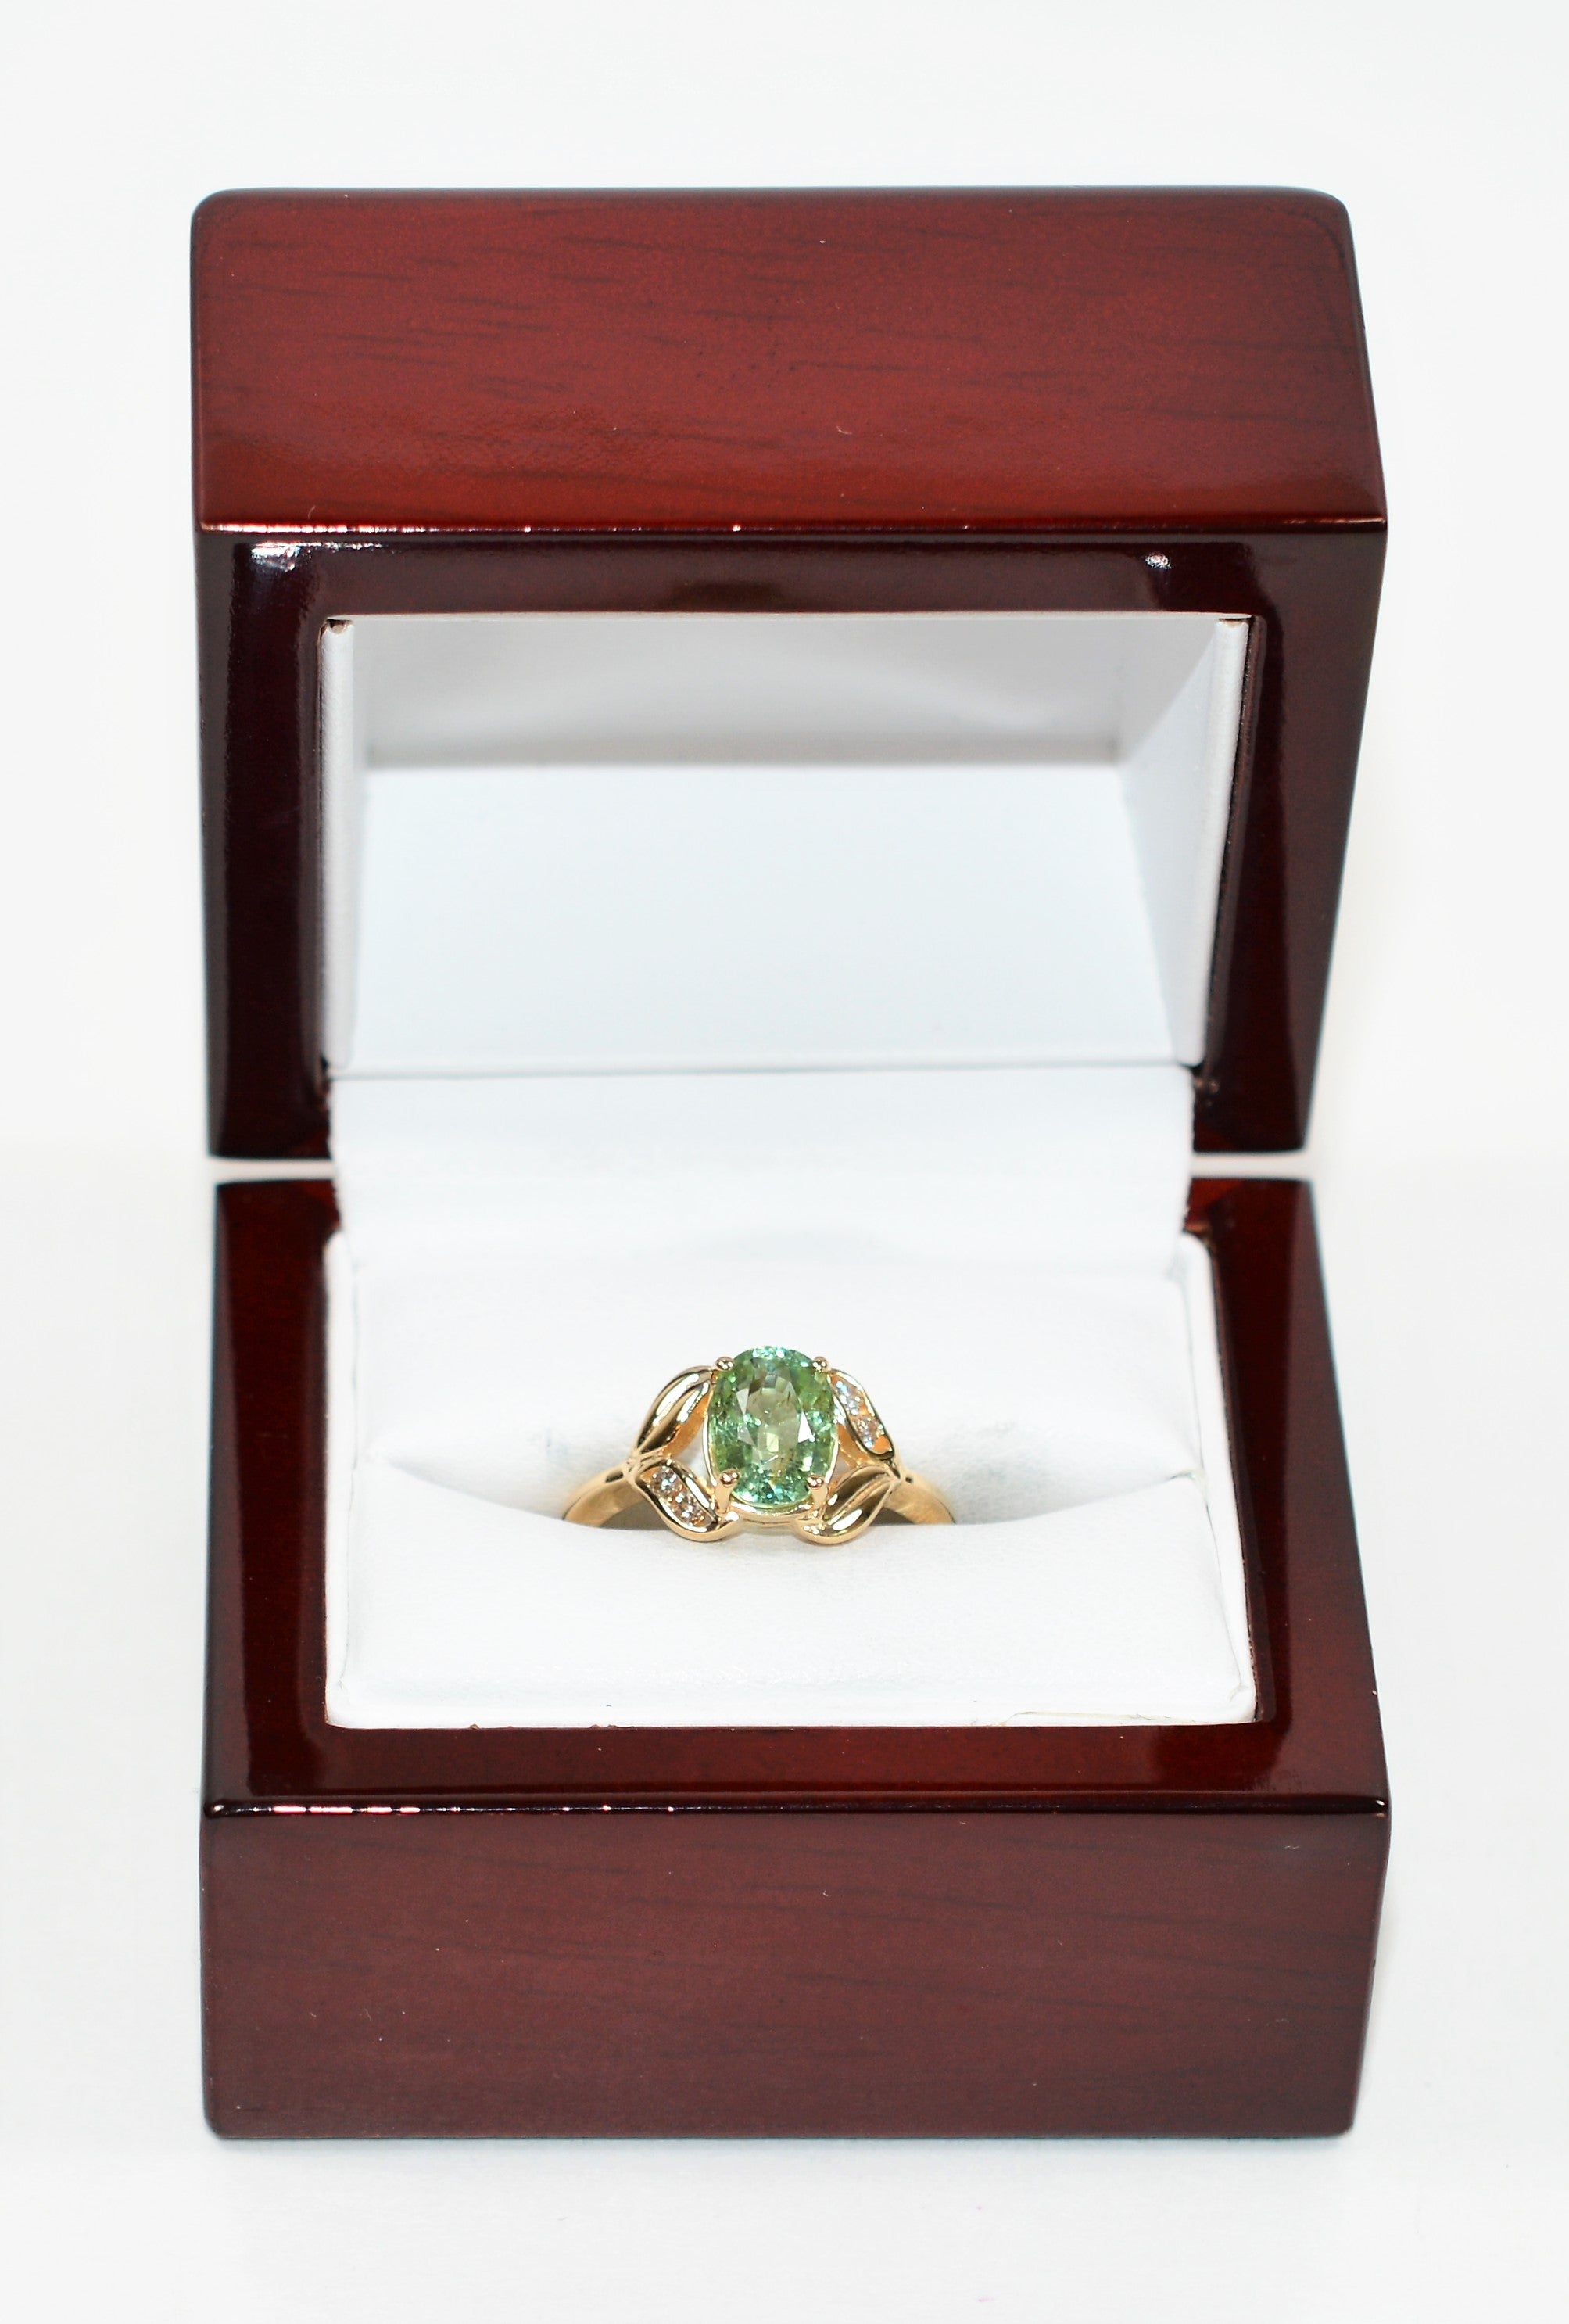 Natural Paraiba Tourmaline & Diamond Ring 10K Solid Gold 2.13tcw Women's Ring Gemstone Jewellery Birthstone Ring Statement Ring Fine Jewelry